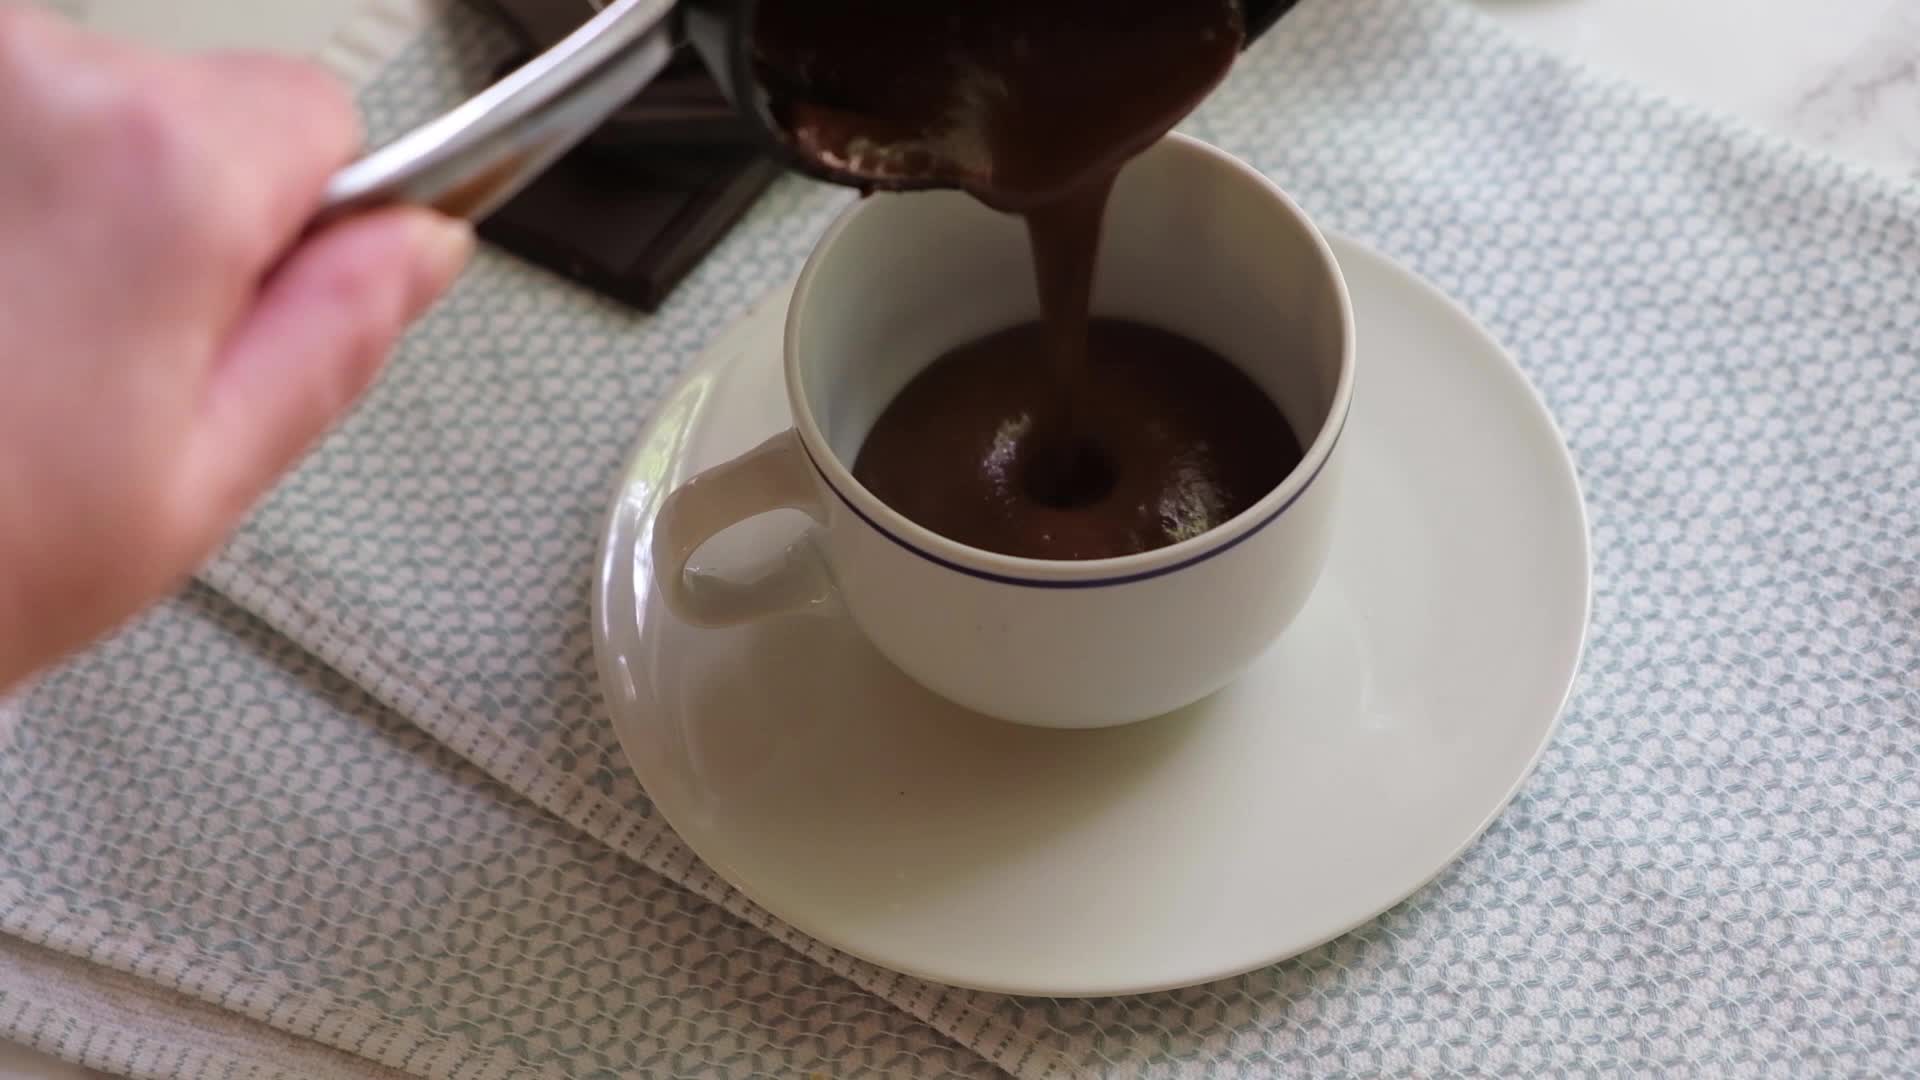 Parisian Hot Chocolate (Chocolat Chaud) - Pardon Your French